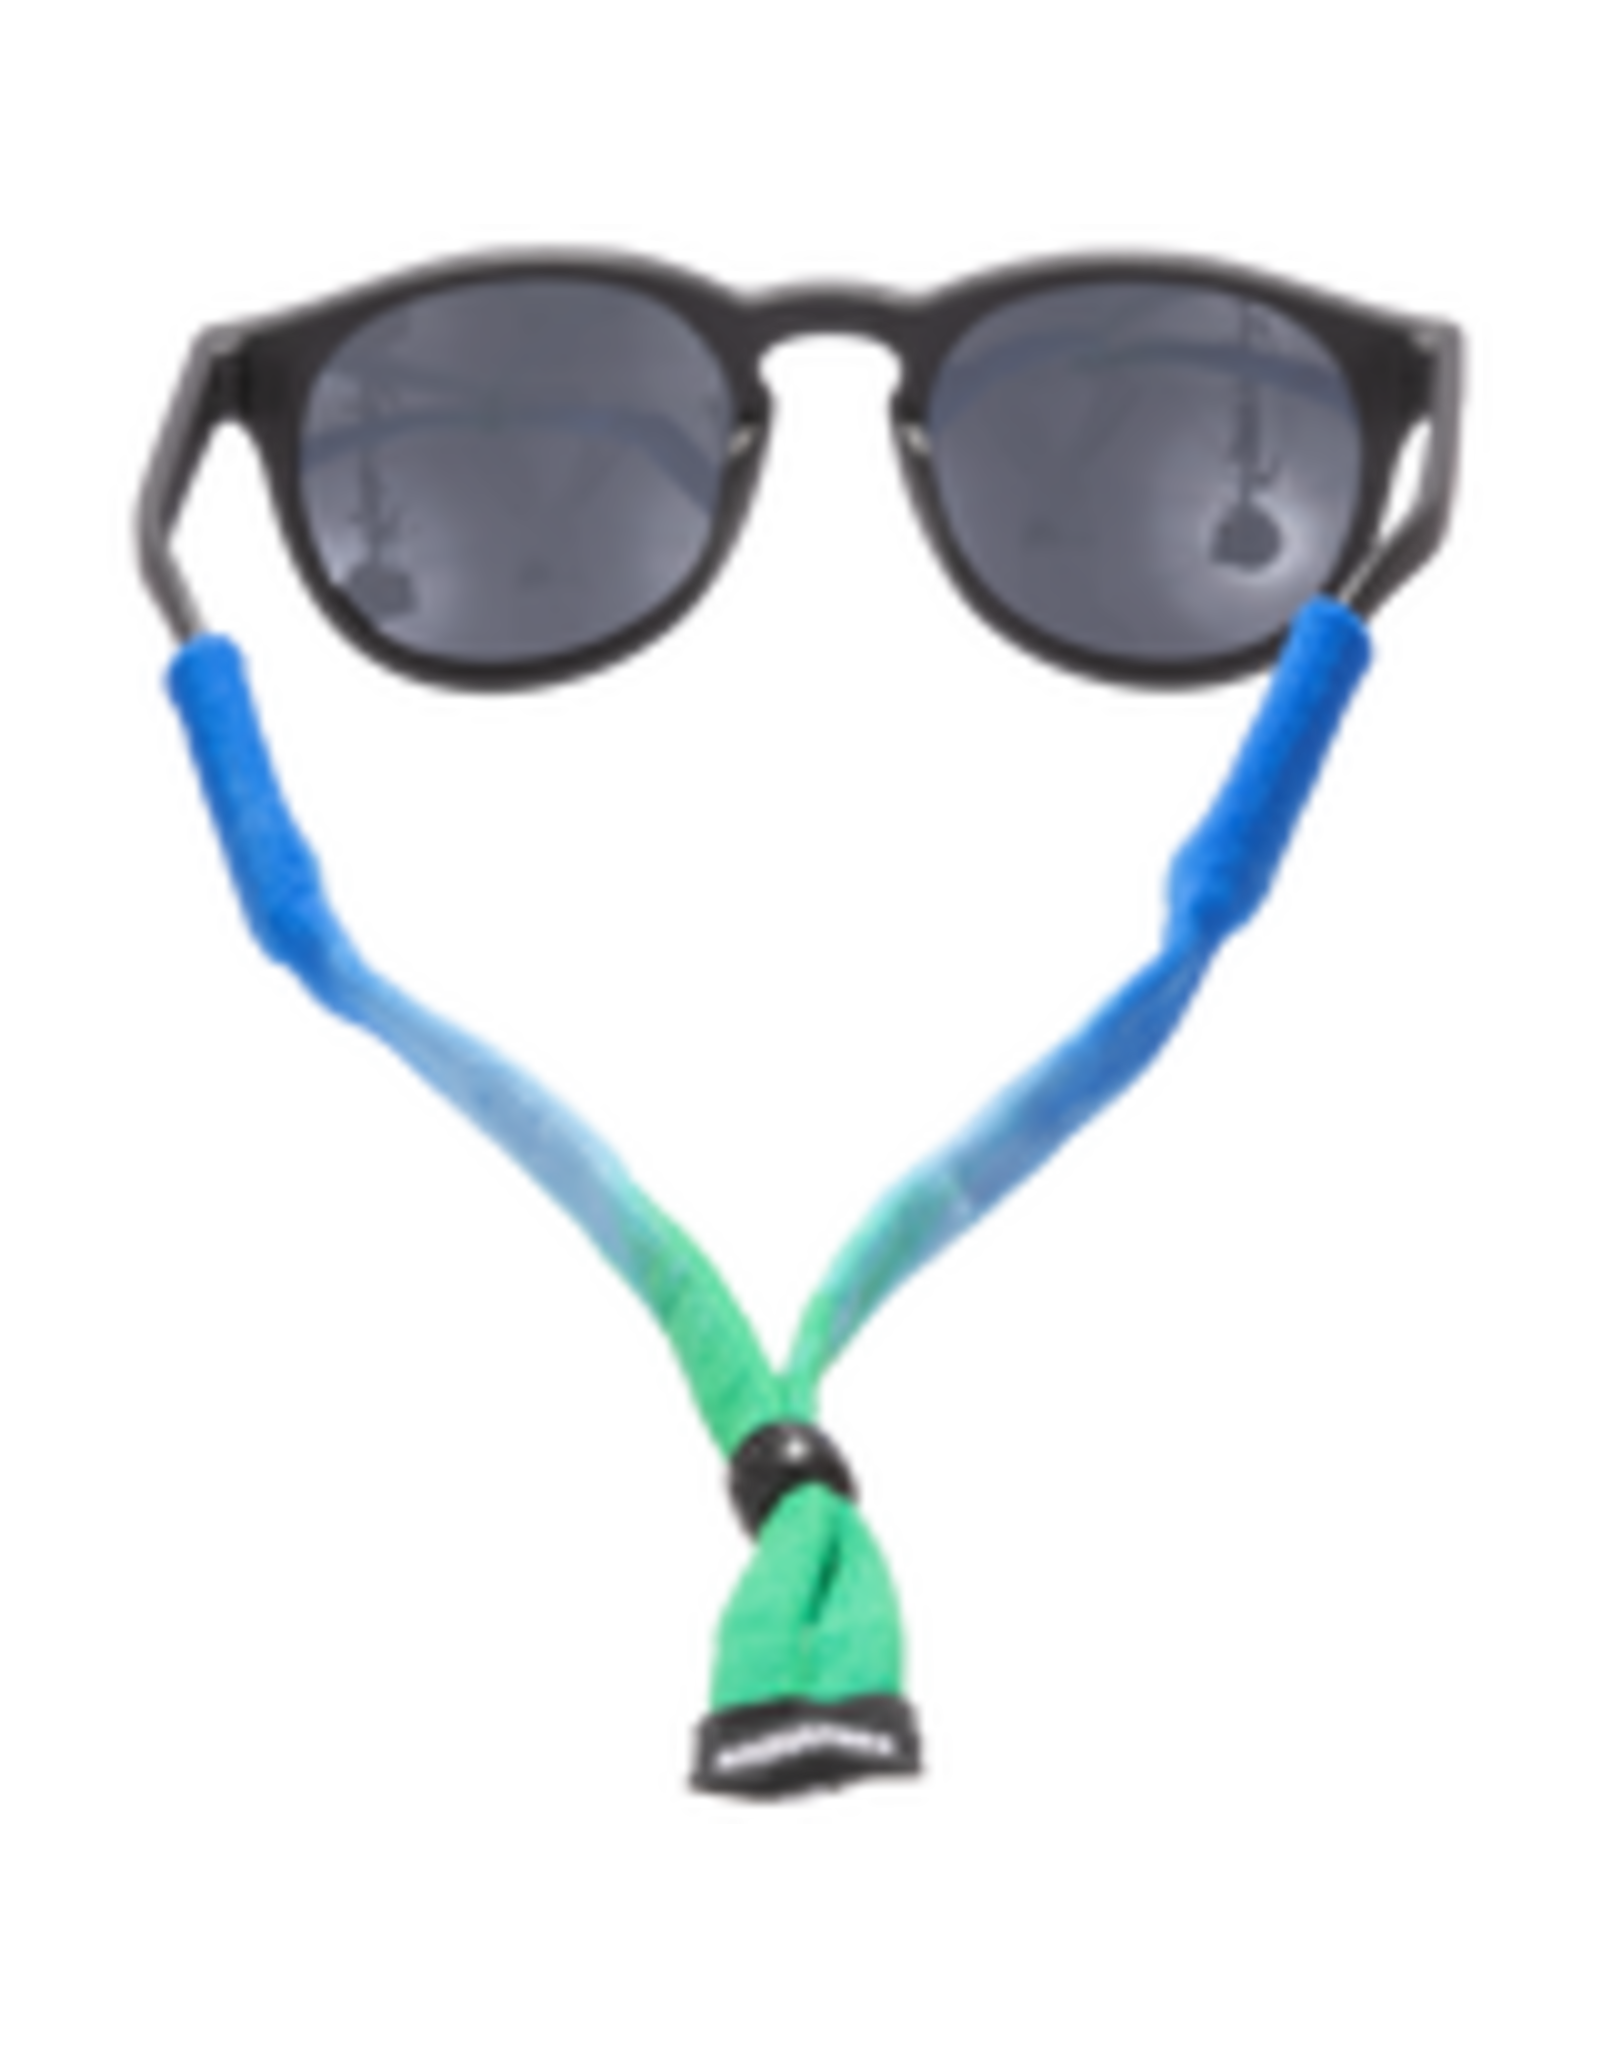 Babiators Fabric Sunglasses Strap: Blue Ombre